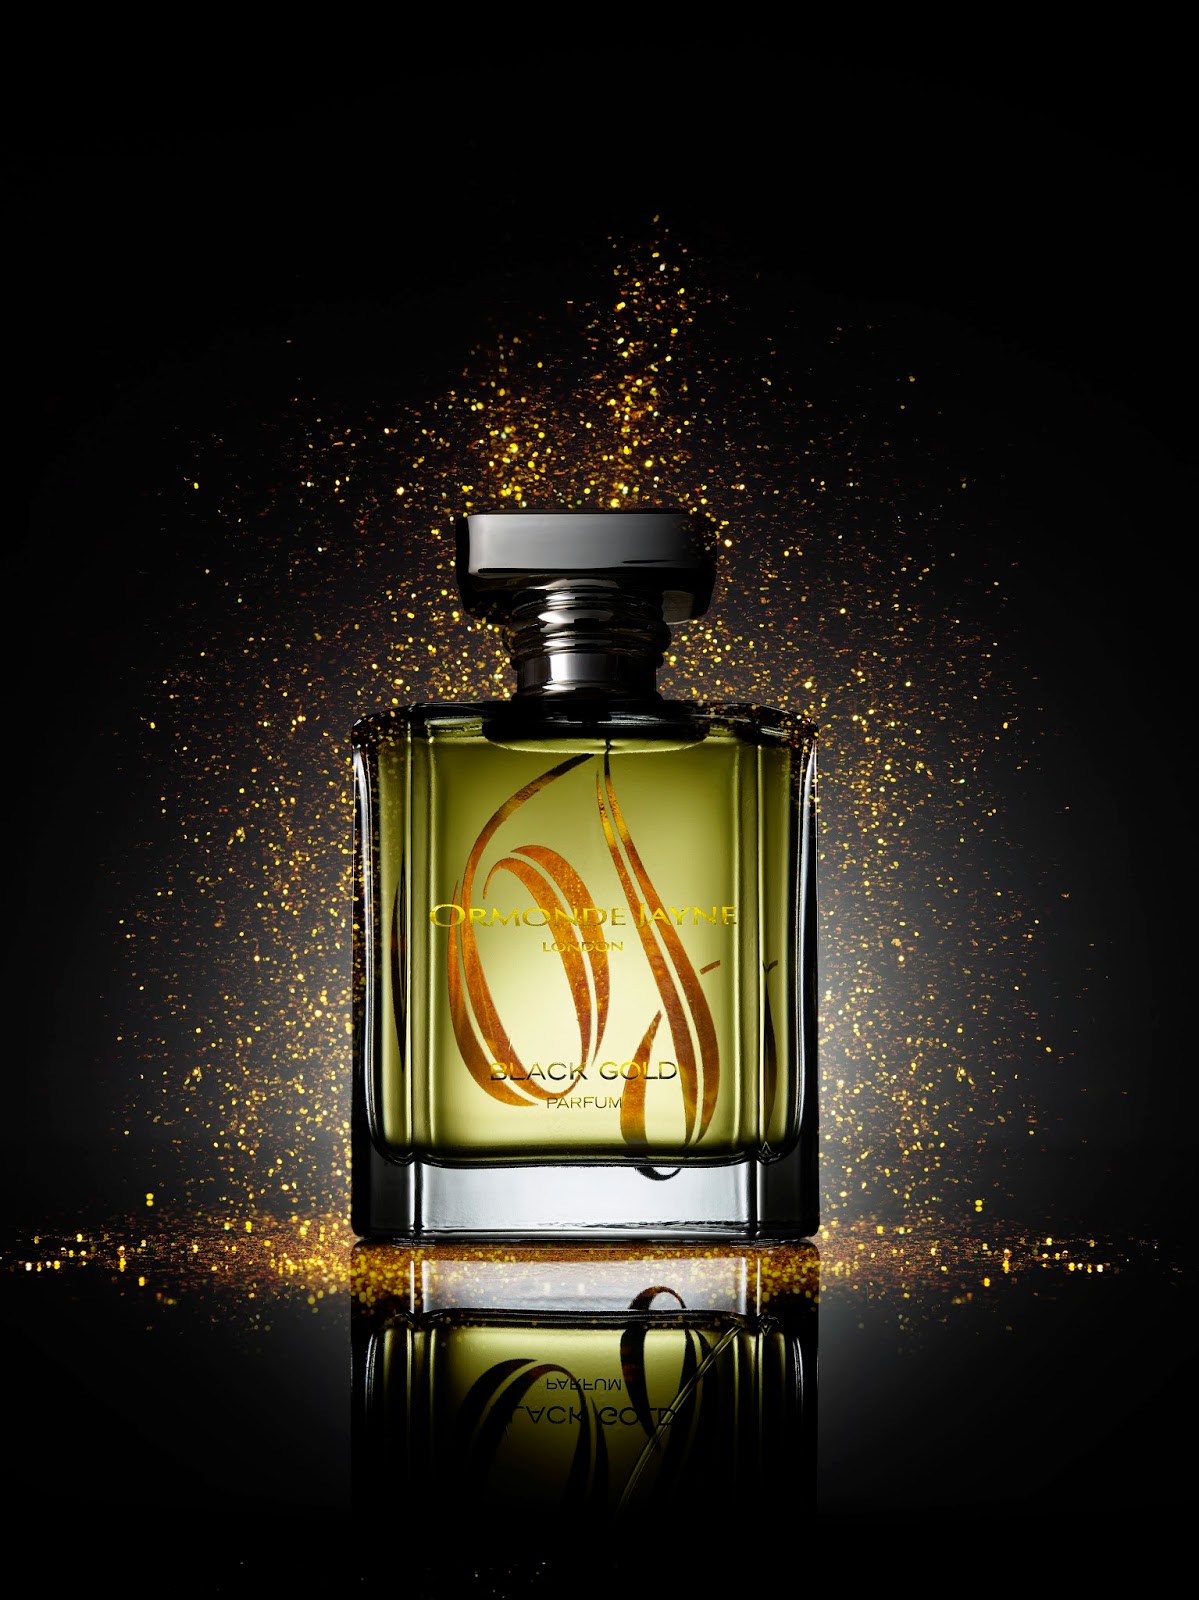 frumpy to funky: Ormonde Jayne's new fragrance – Black Gold